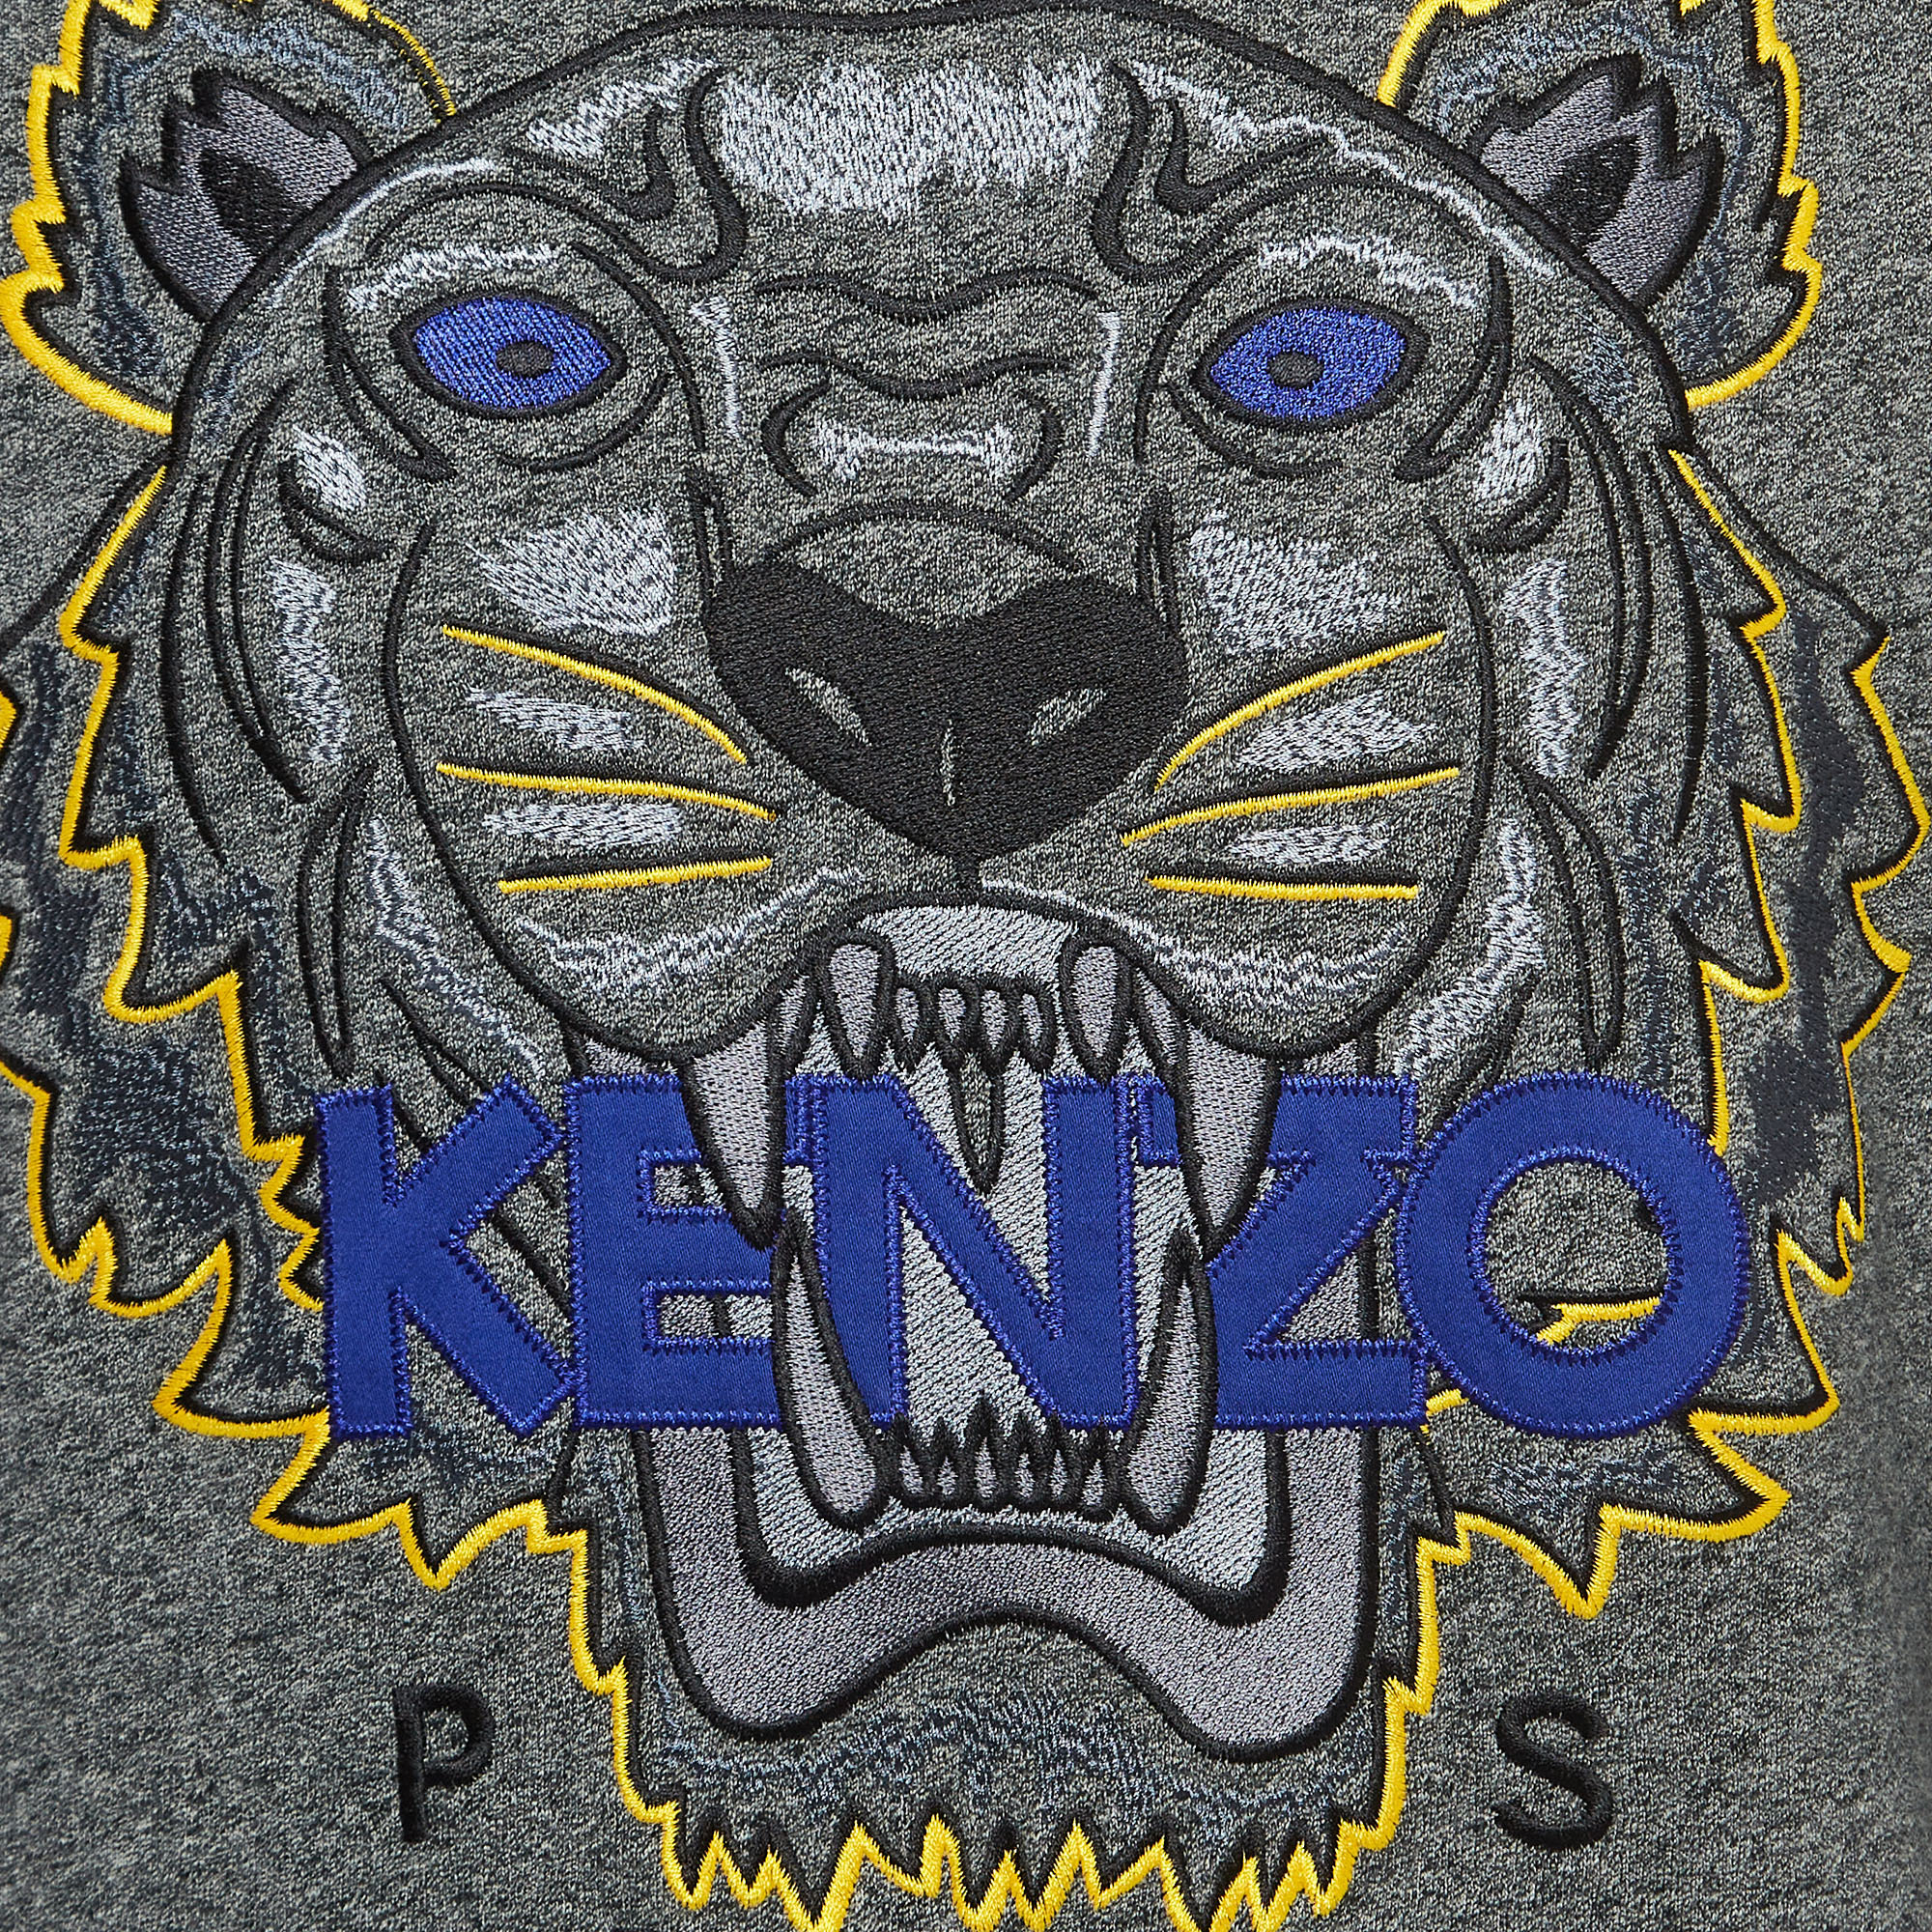 Kenzo Grey Logo Tiger Embroidered Cotton Crew Neck Sweatshirt S